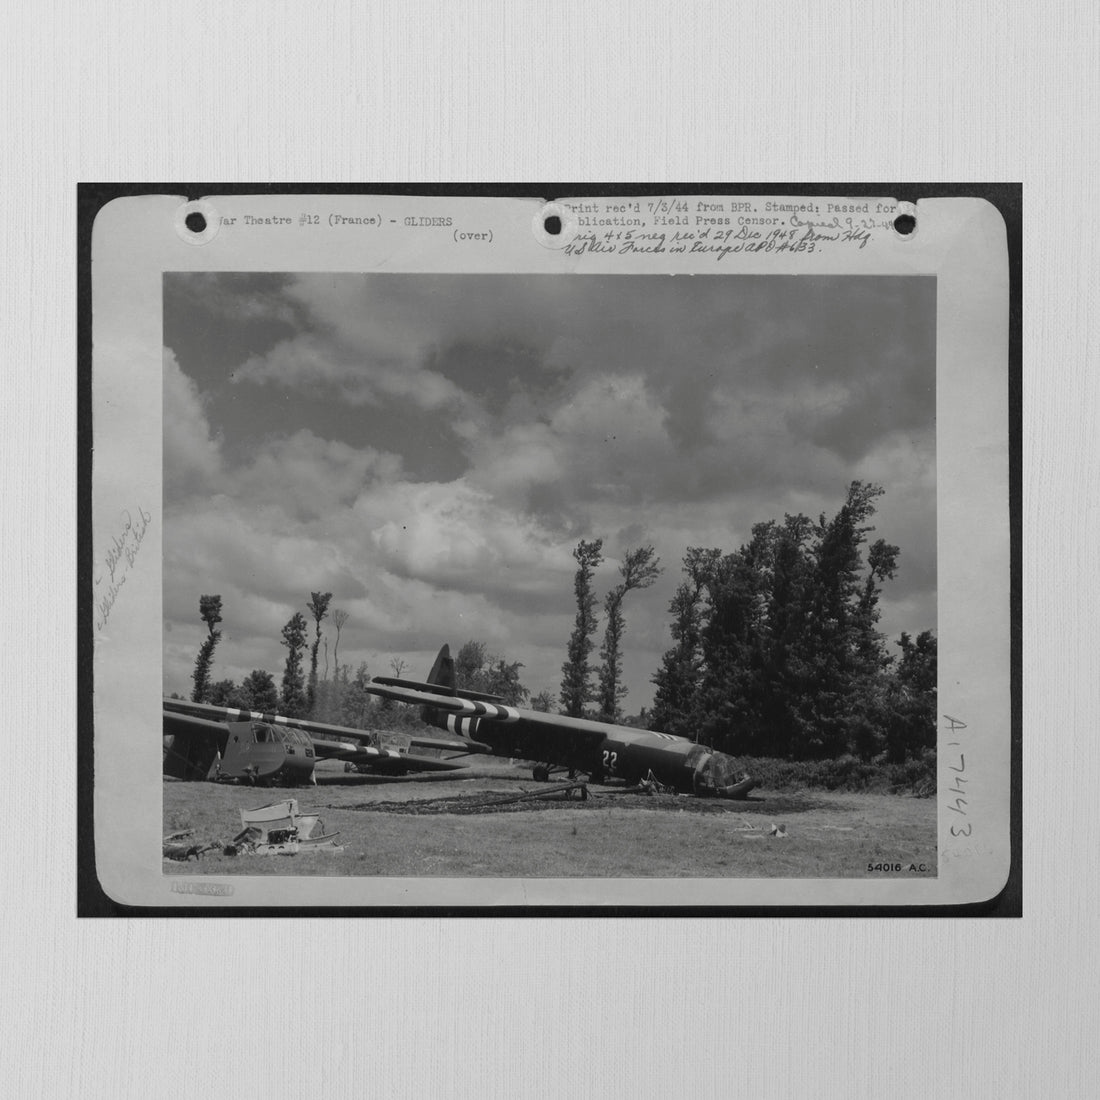 Gliders by BPR, 1944